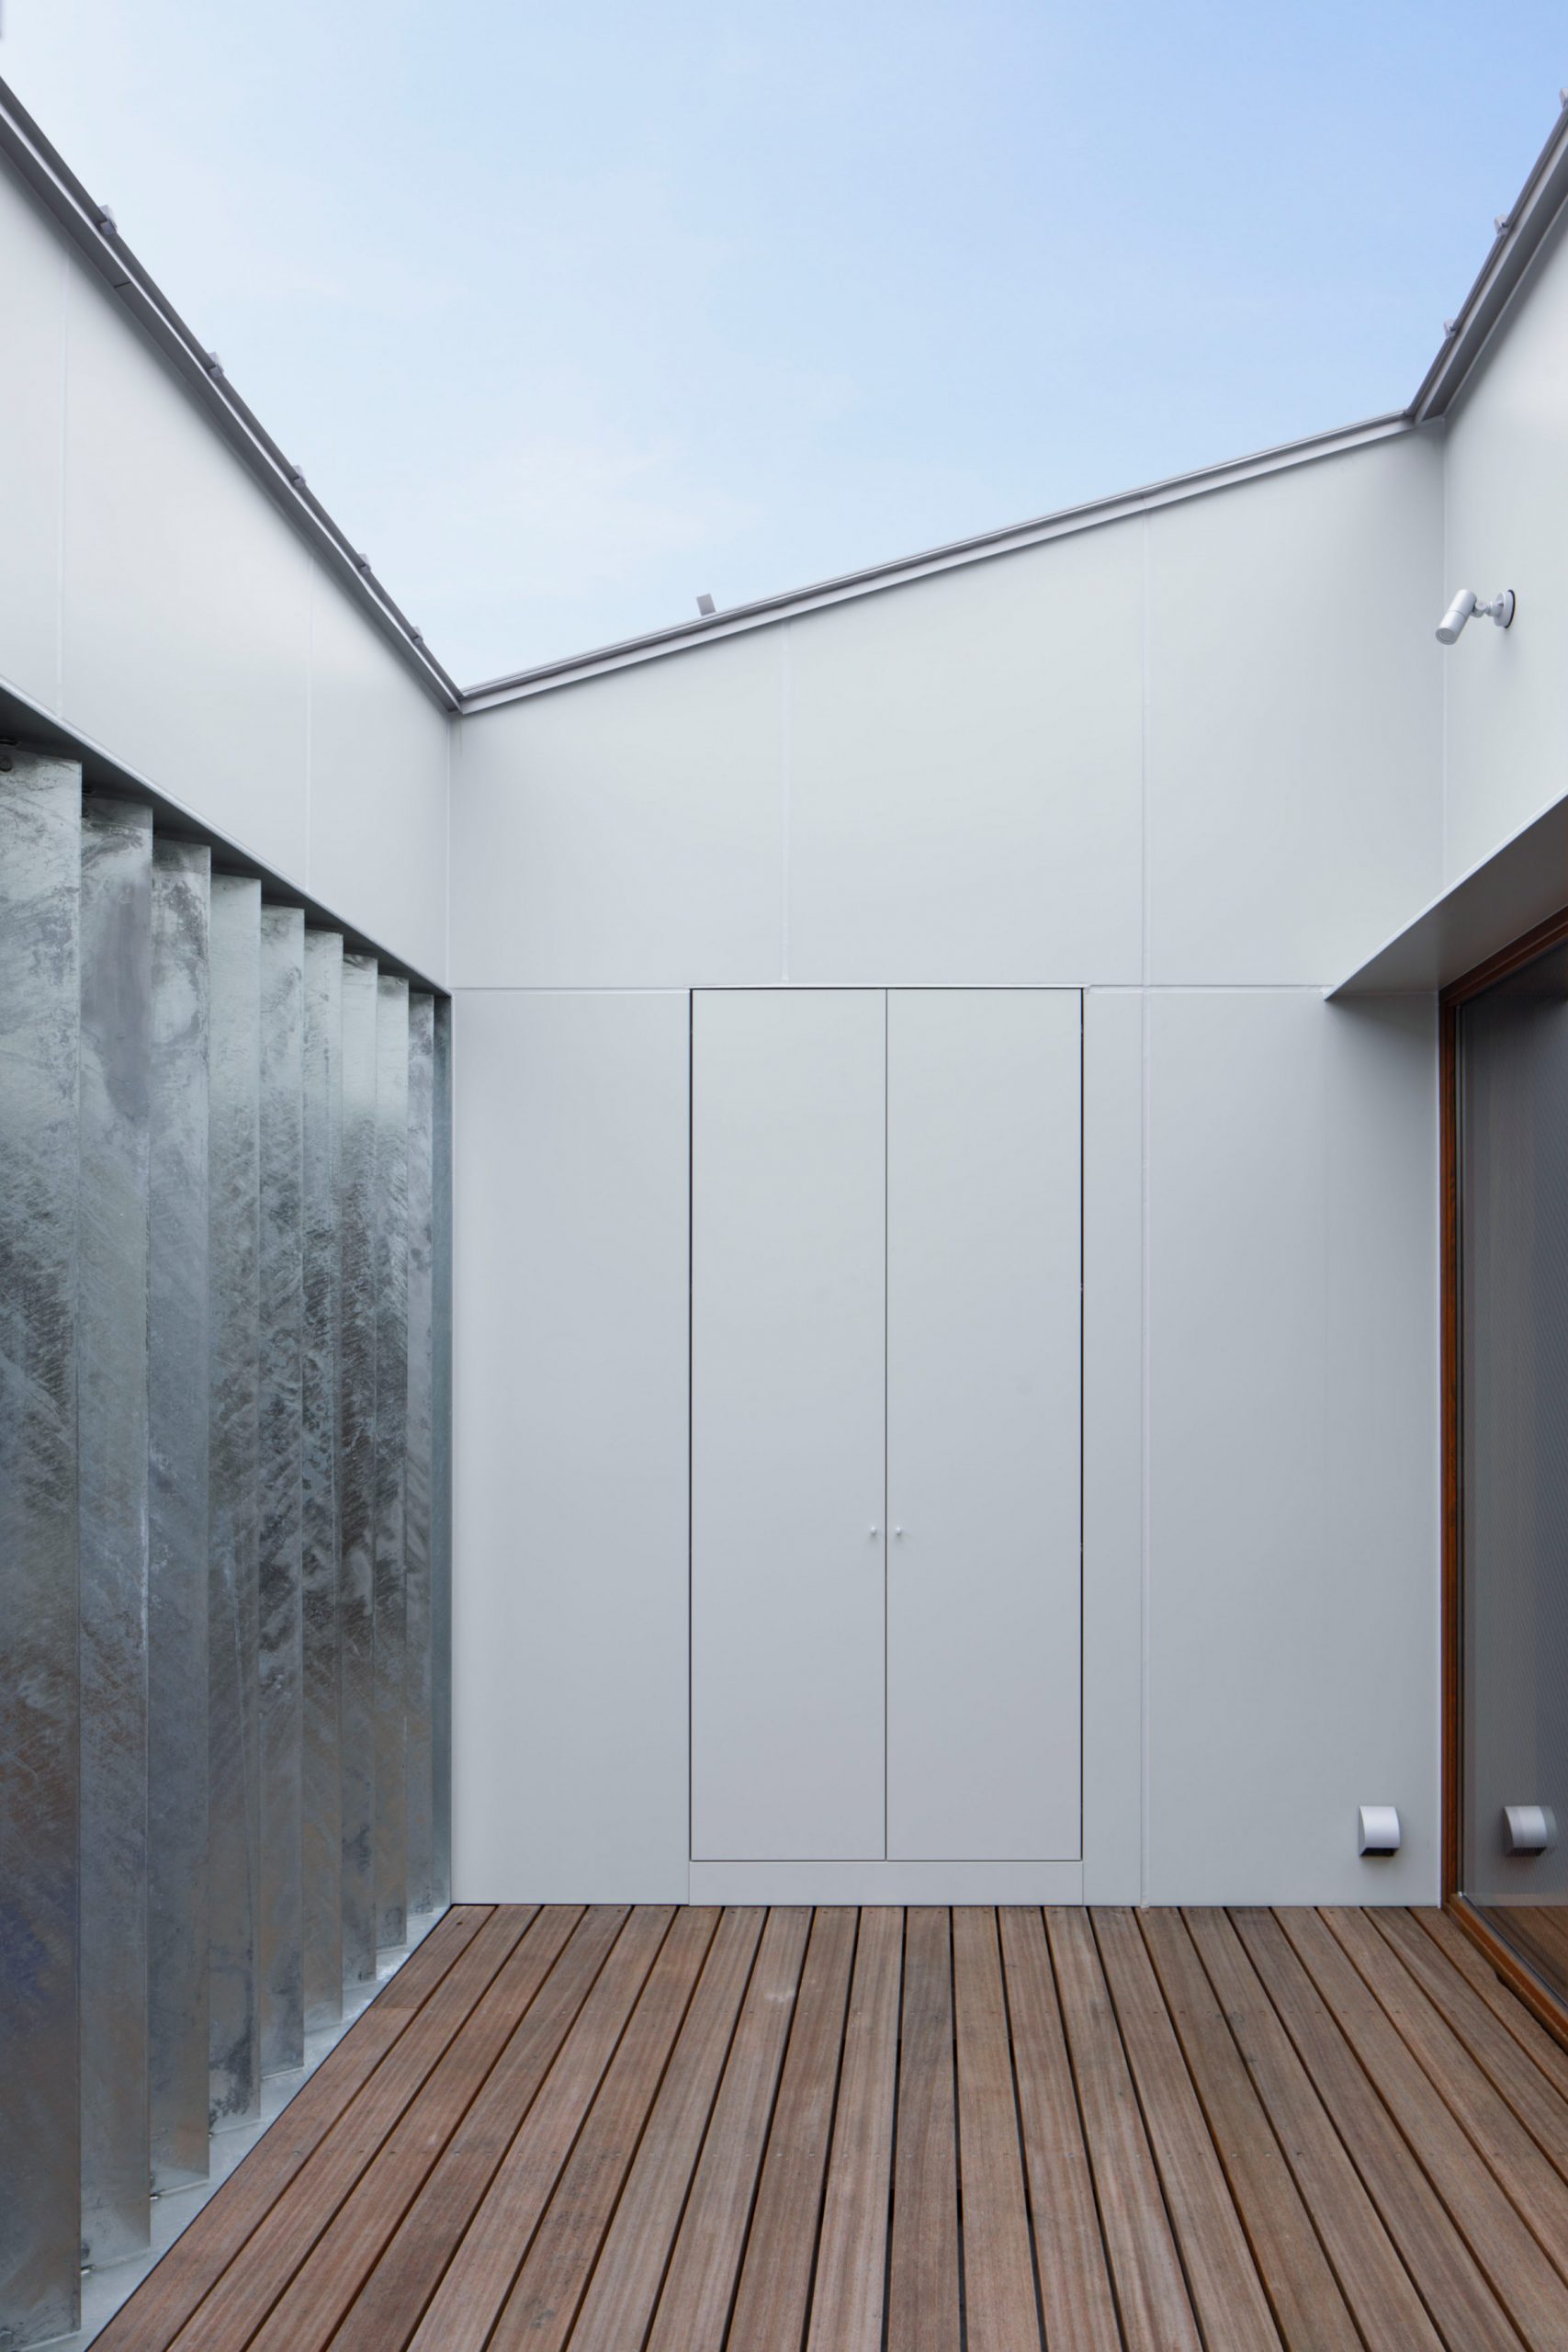 Case-Real clads House in Higashi-Gotanda in galvanised steel panels